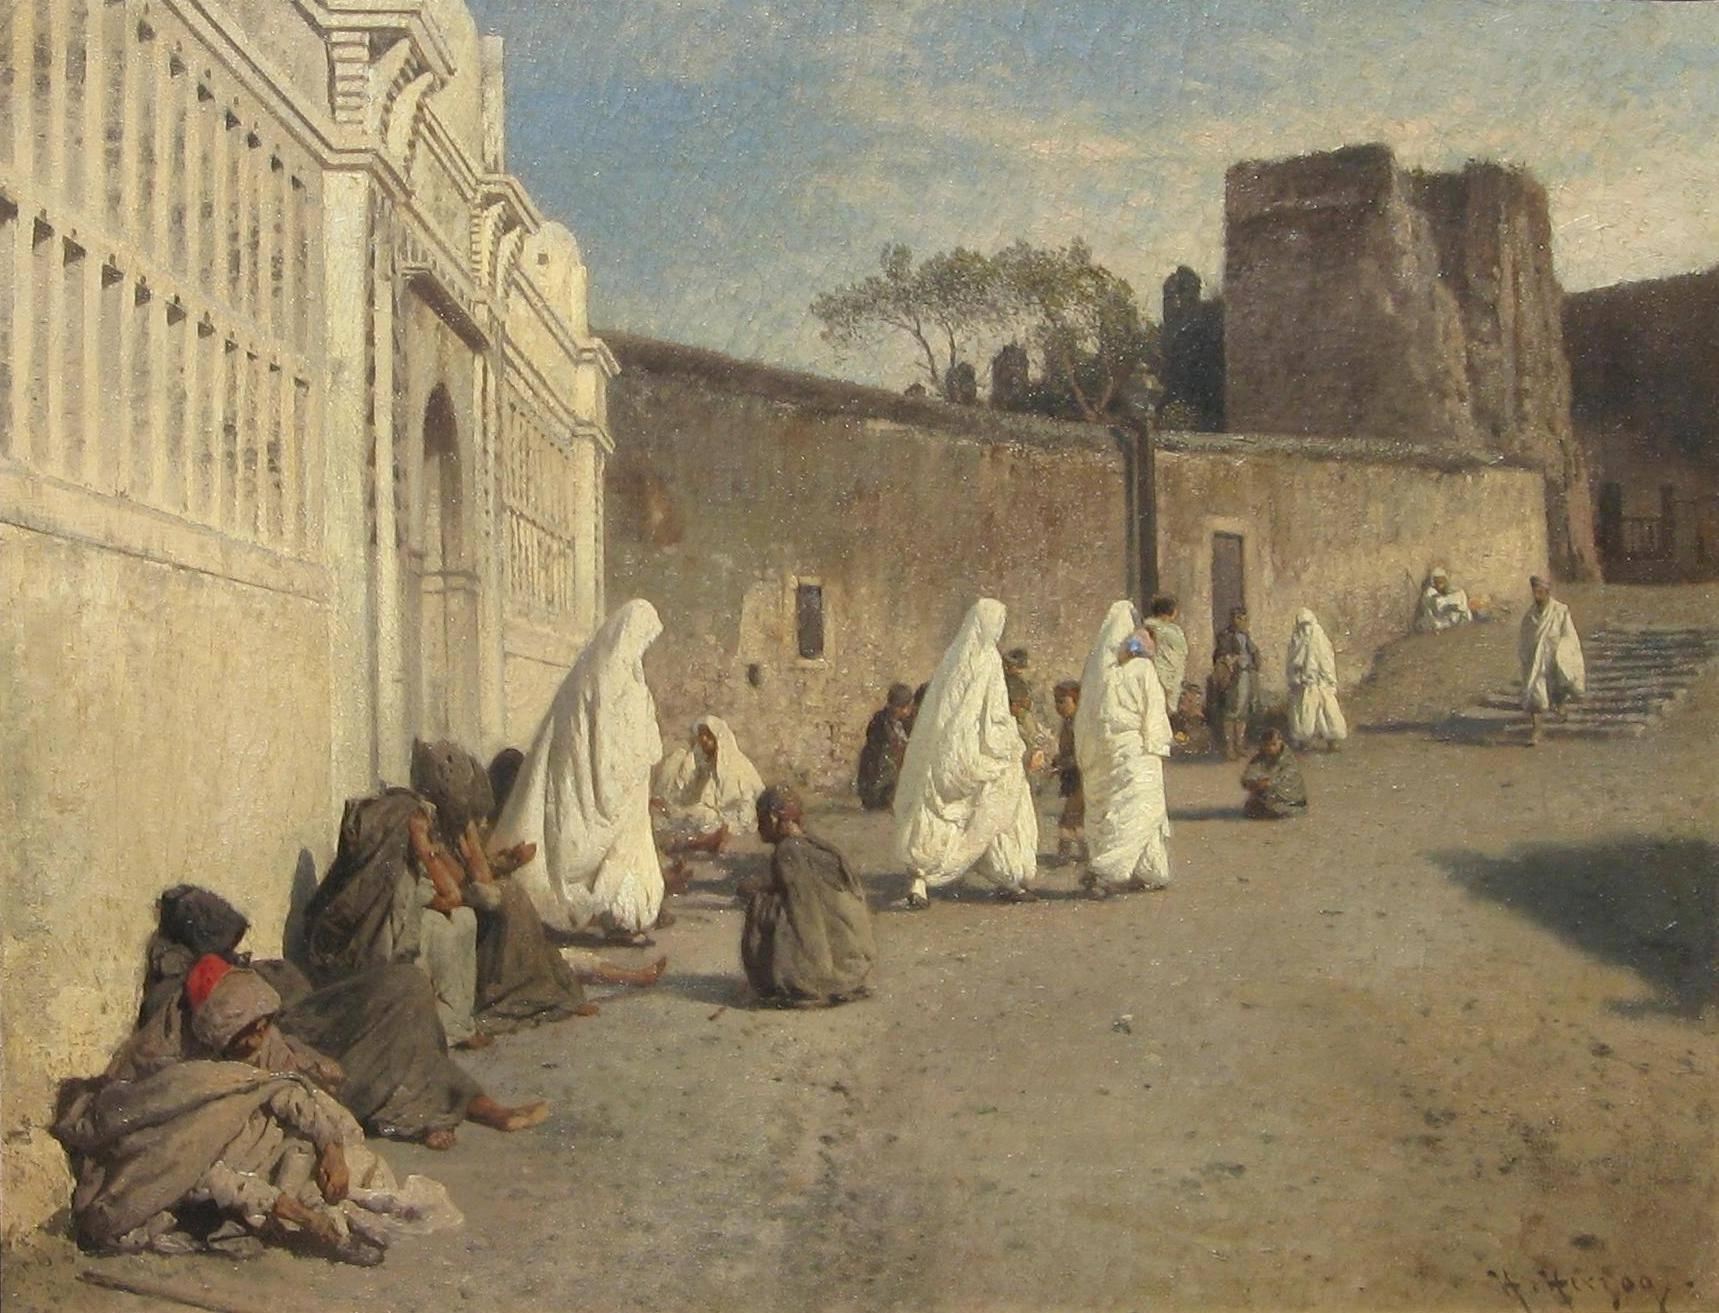 Hermann Herzog (1832-1932) orientalist oil on canvas, circa 1900
Image Measures: 22